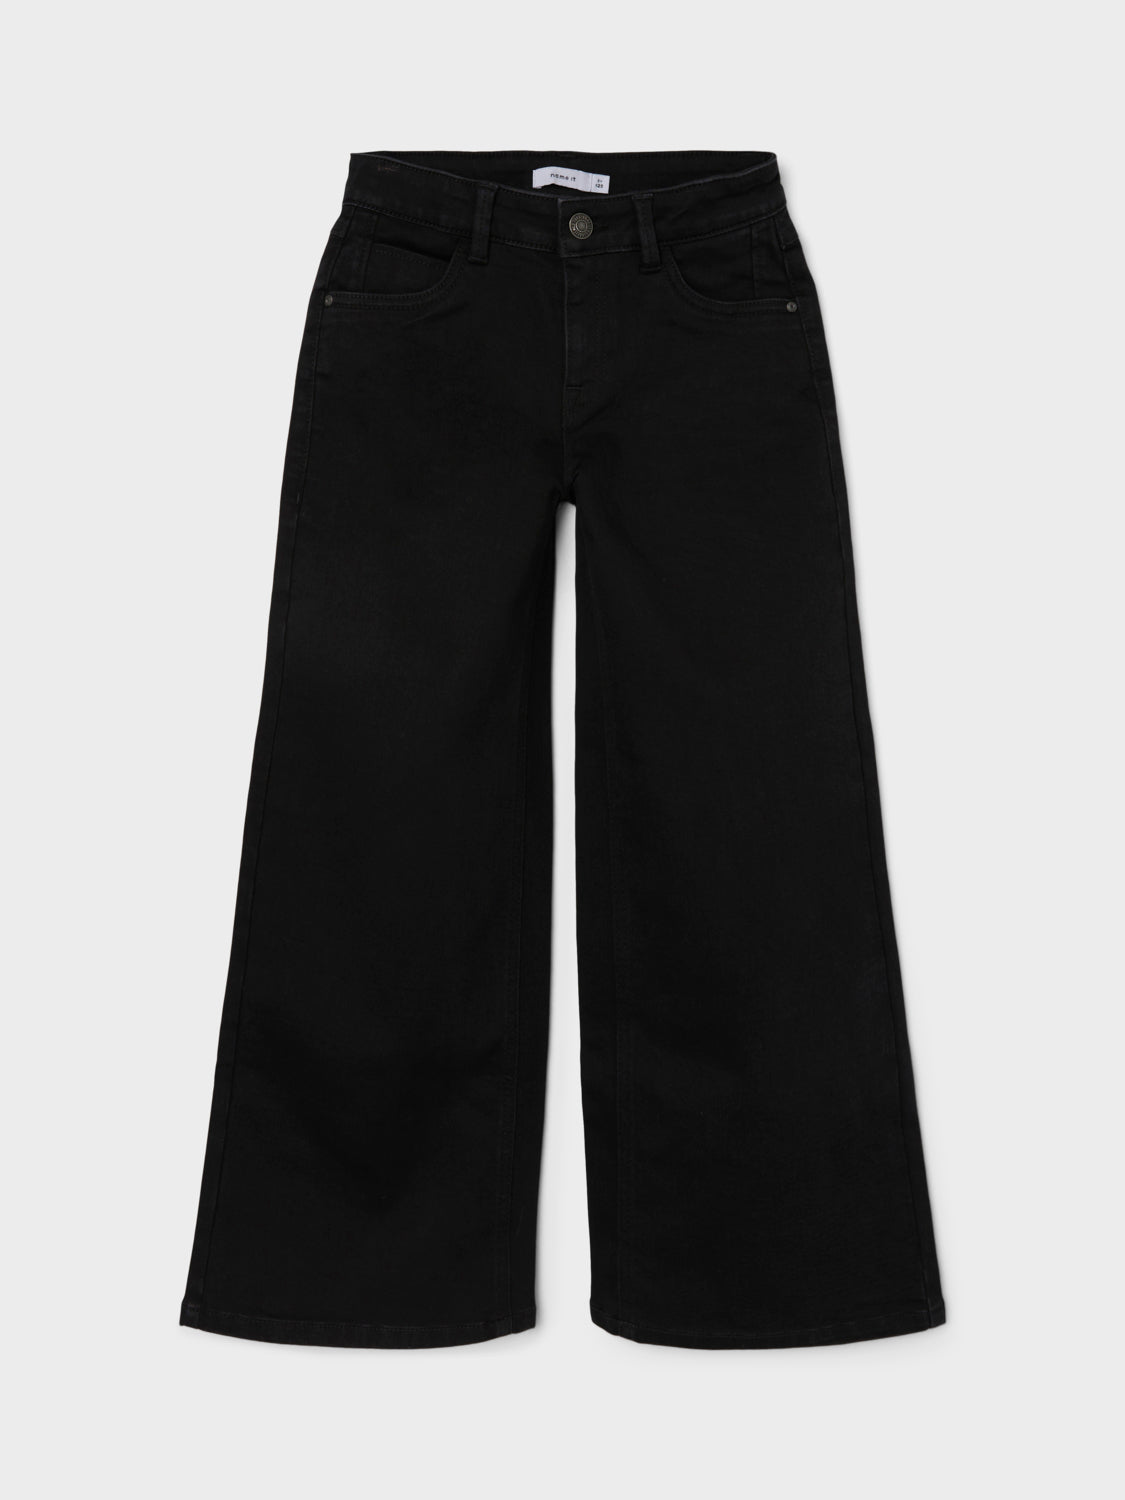 NKFBWIDE Jeans - Black Denim